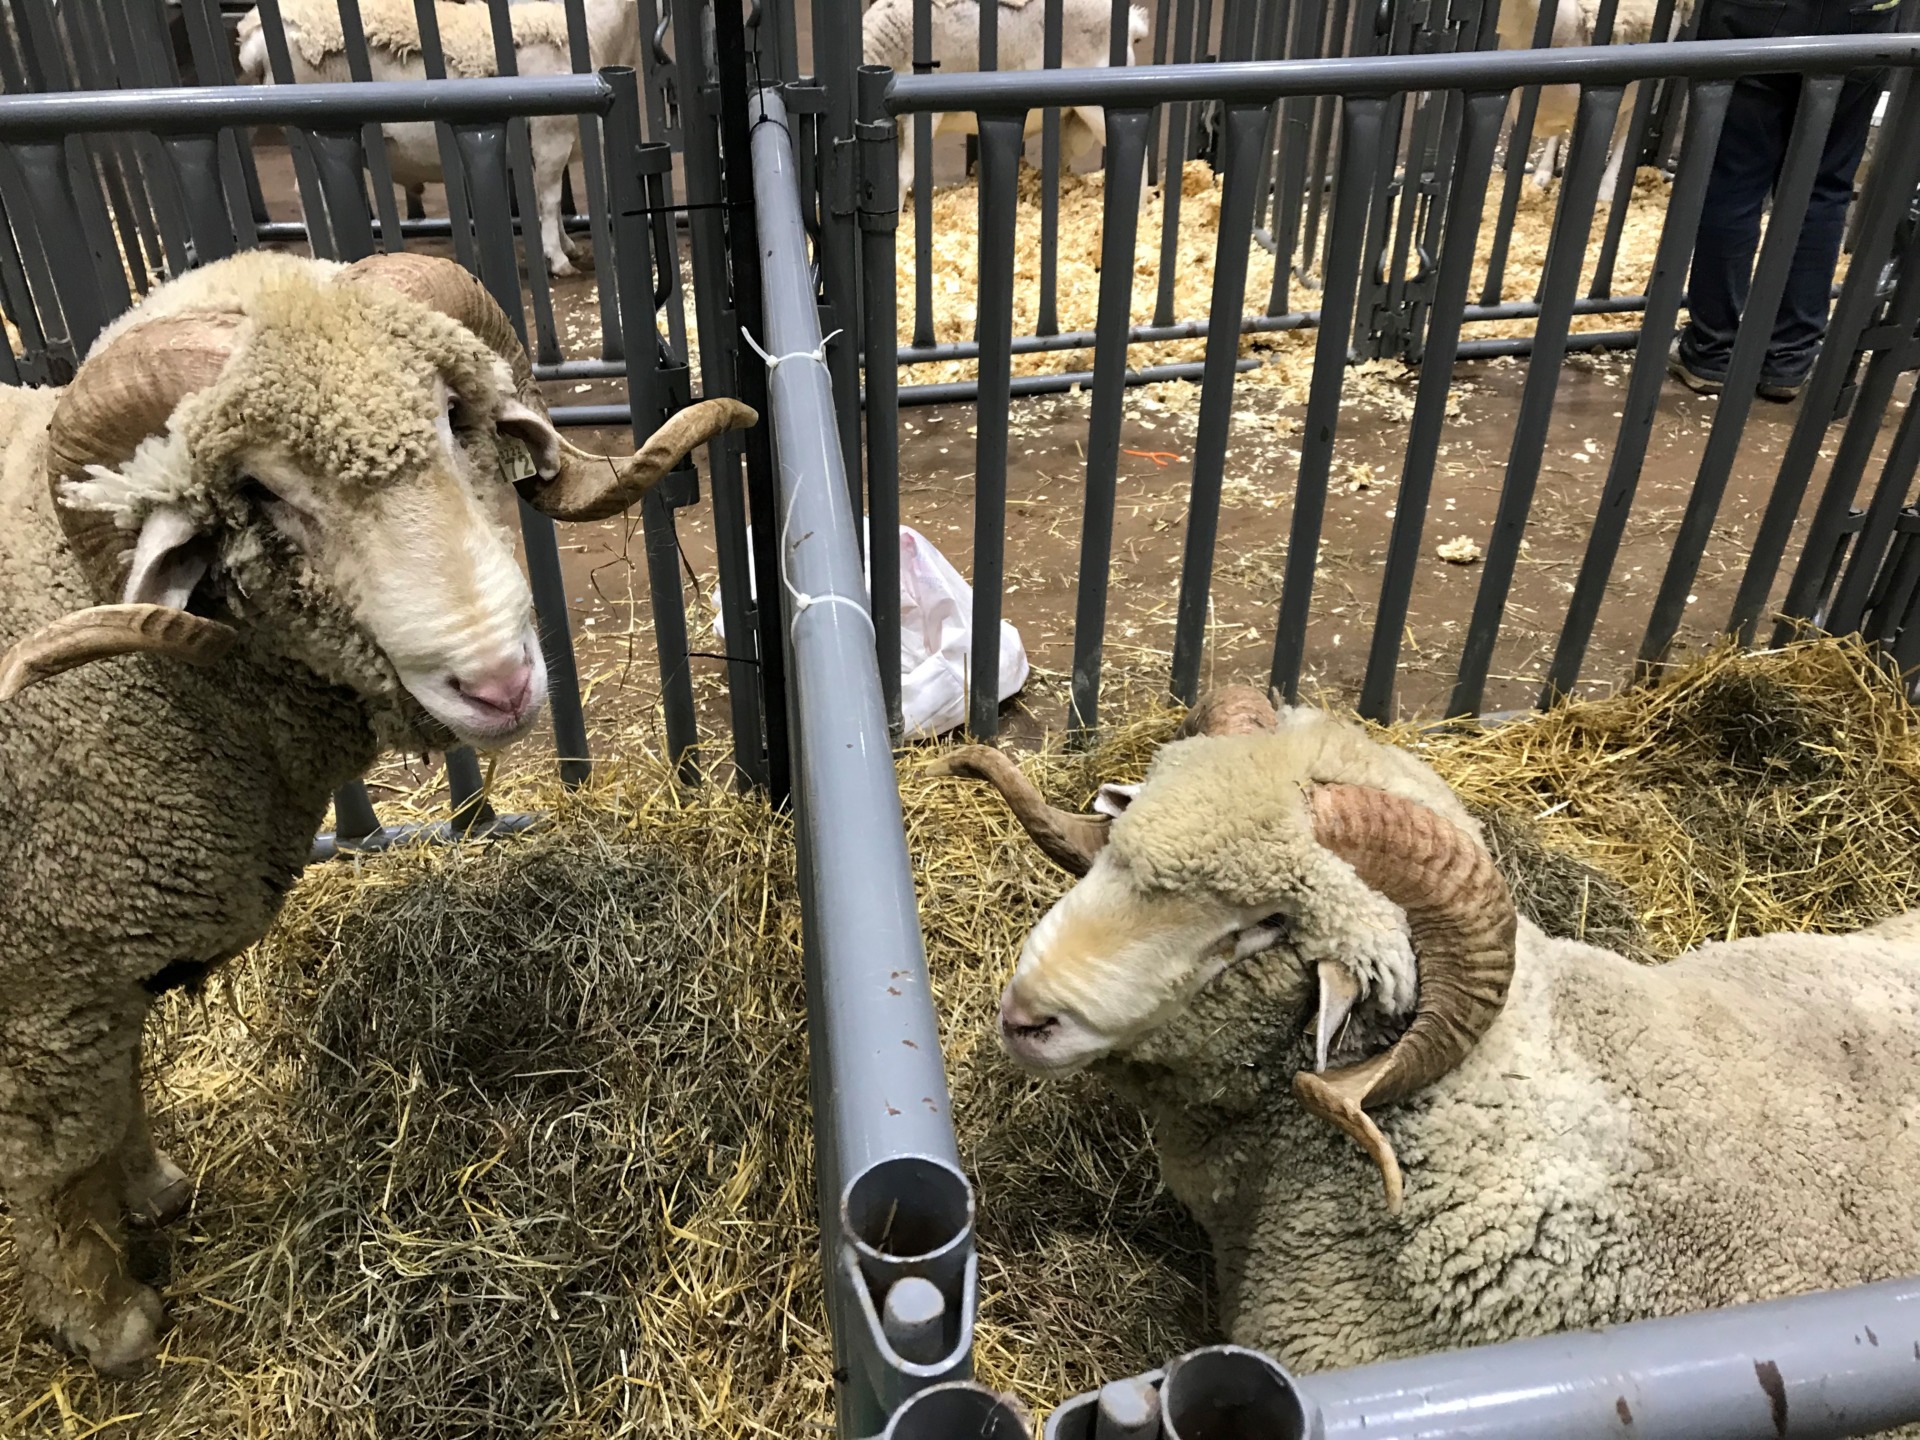 Texas Performance Sheep, Goat Sale set online Aug. 20 - AgriLife Today